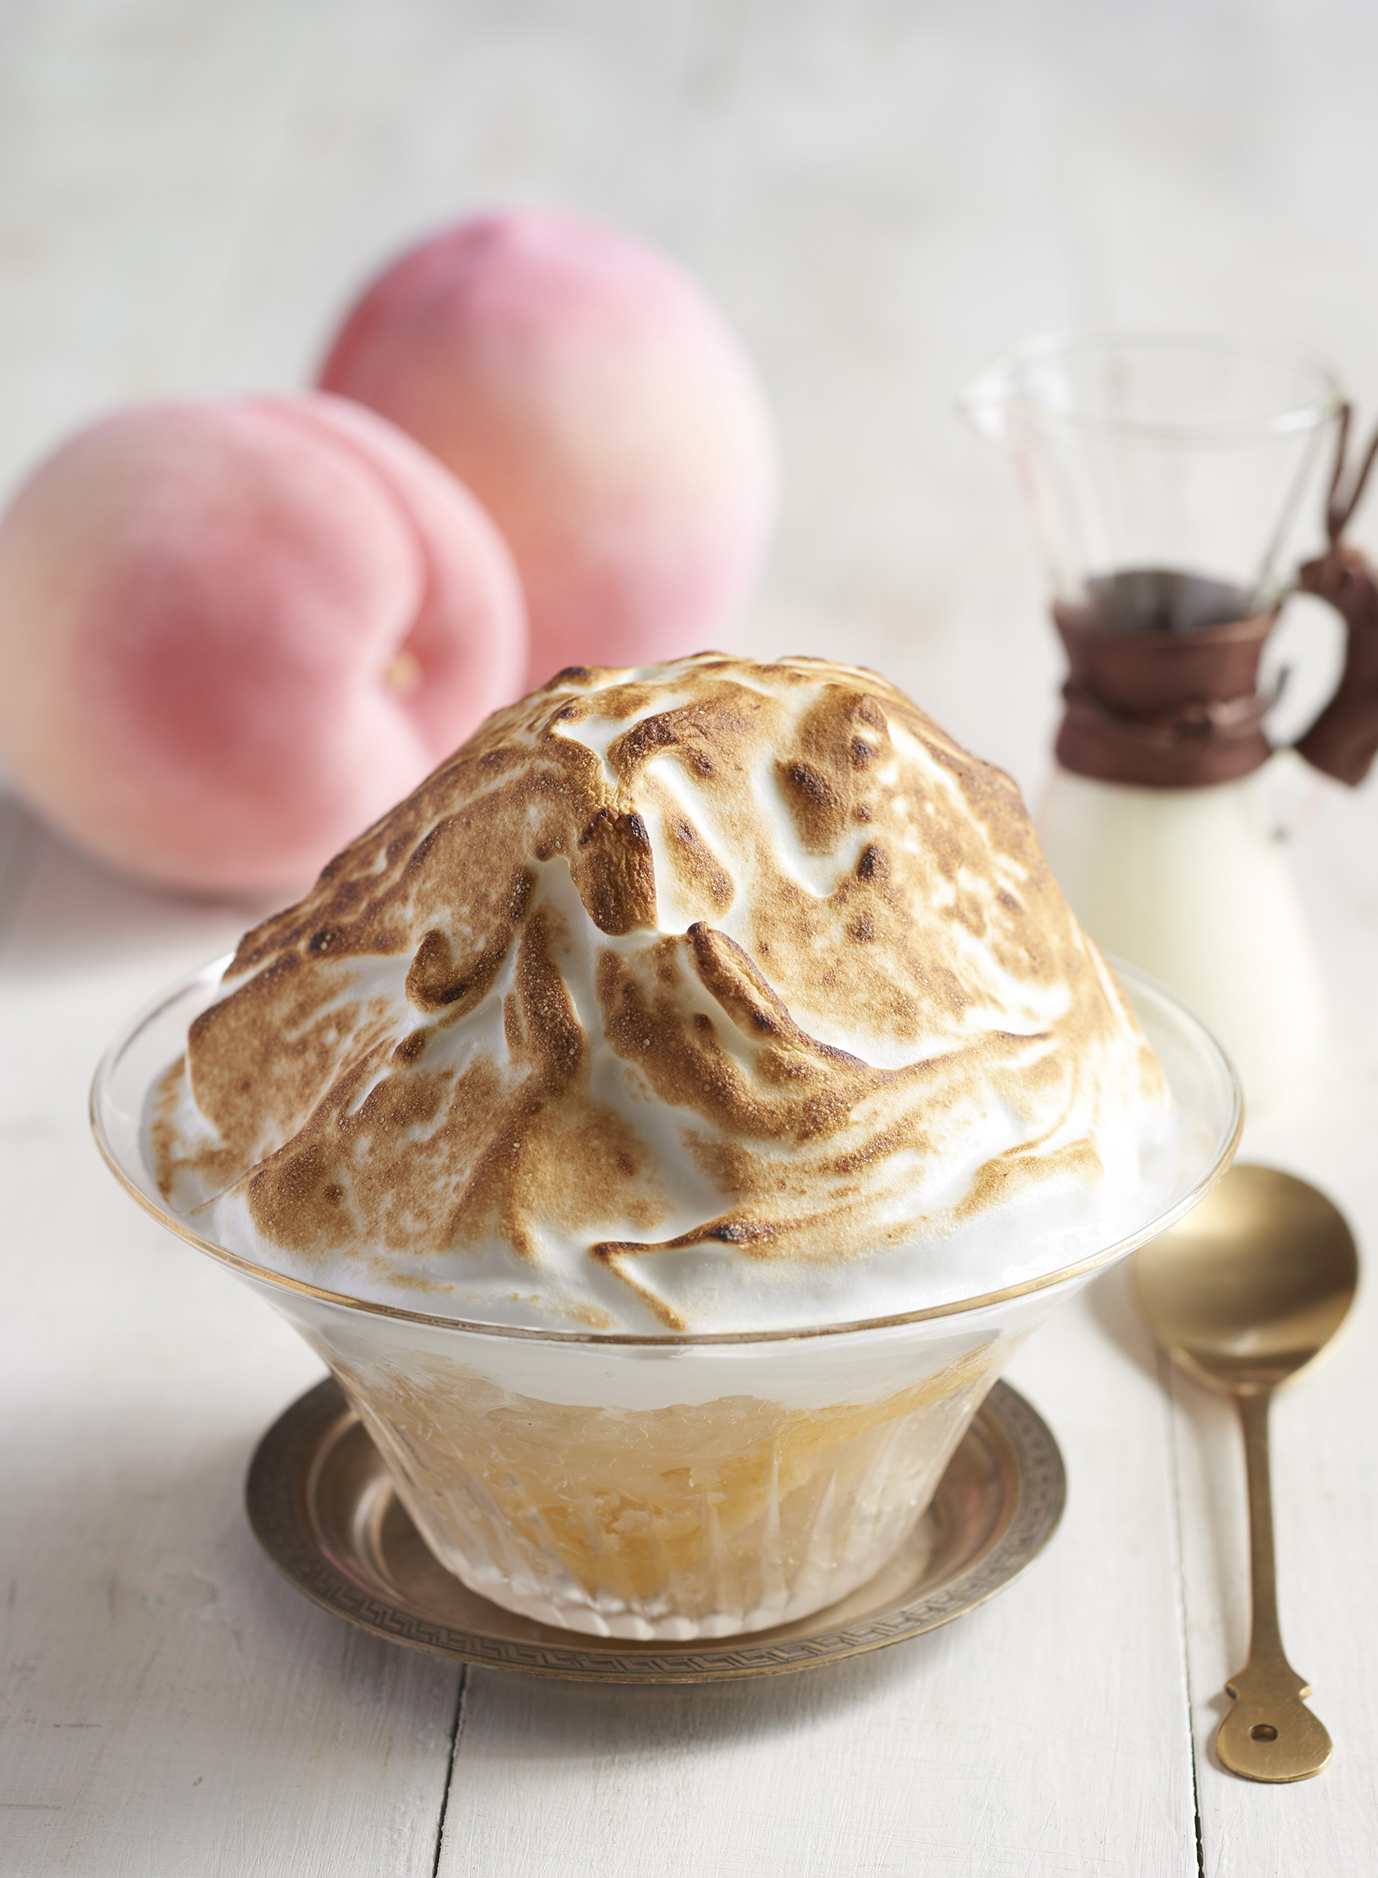 Kihachi Cafe 今年は桃 焼きメレンゲが香ばしい ケーキみたいな かき氷 スイーツ 株式会社サザビーリーグ アイビーカンパニーのプレスリリース